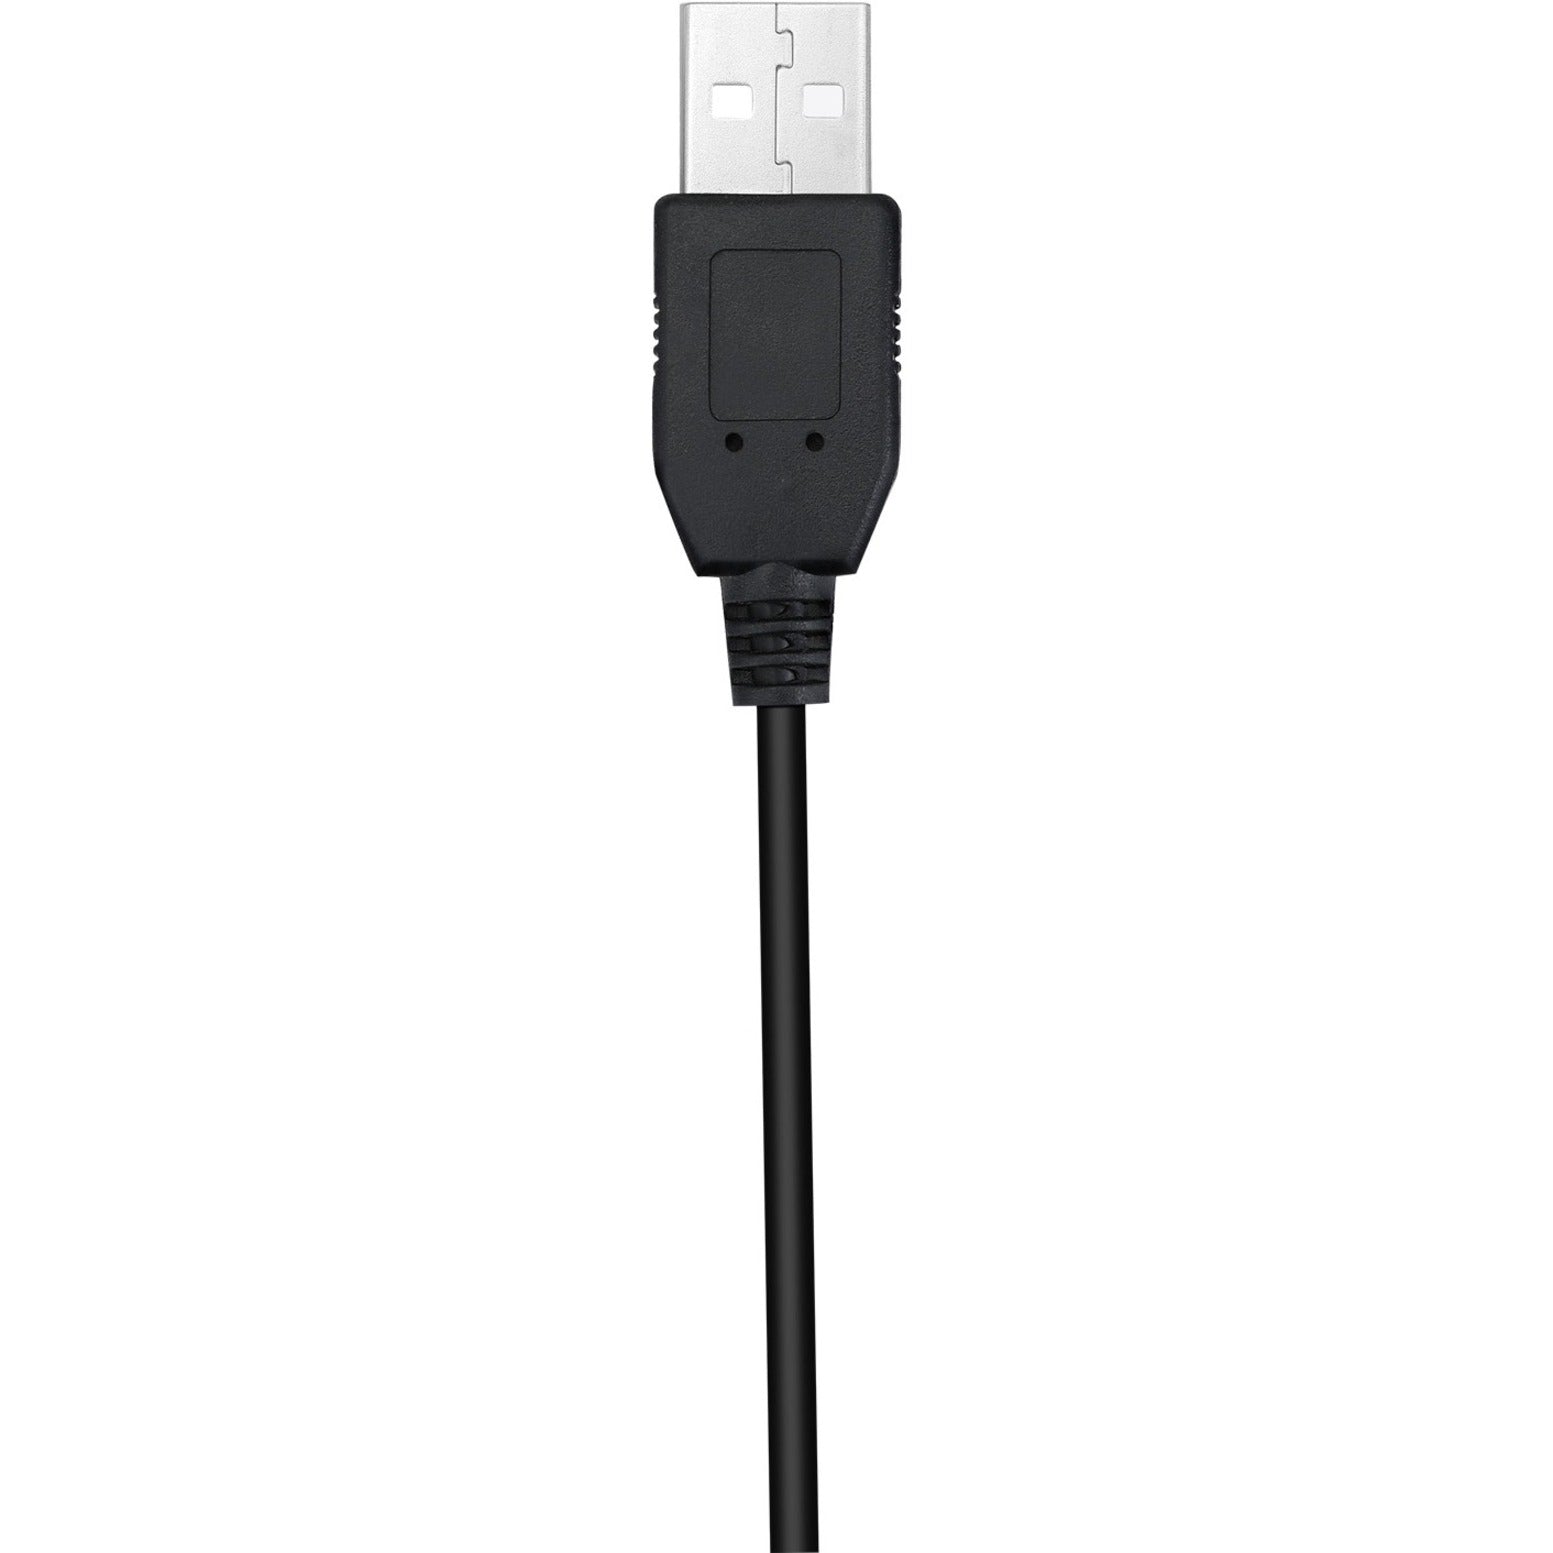 Adesso XTREAM H5U Xtream H5U Stereo USB Multimedia Headset with Microphone, Adjustable Boom Mic, Plug and Play